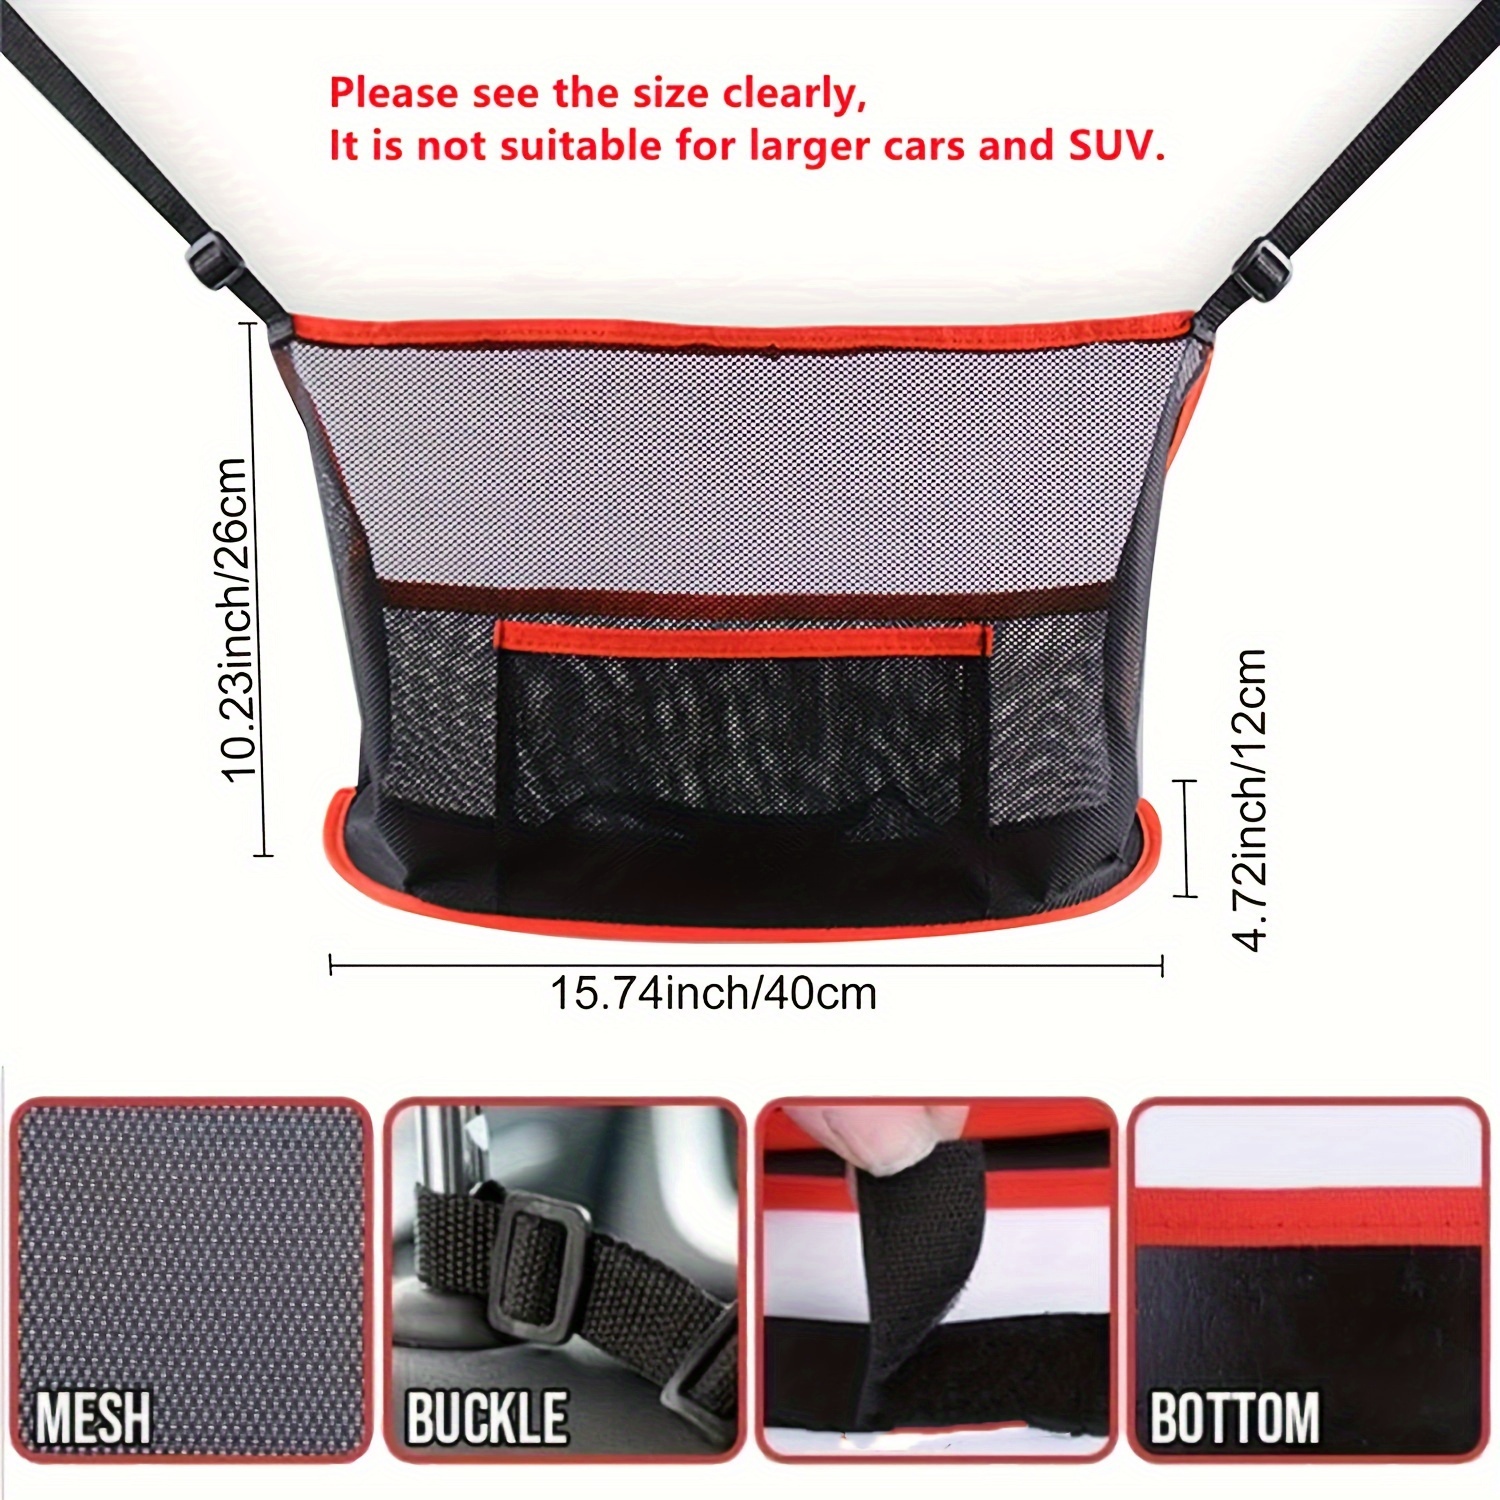 Car Mesh Bag Handbags, Car Net Pocket Handbag Holder, Boot Mesh